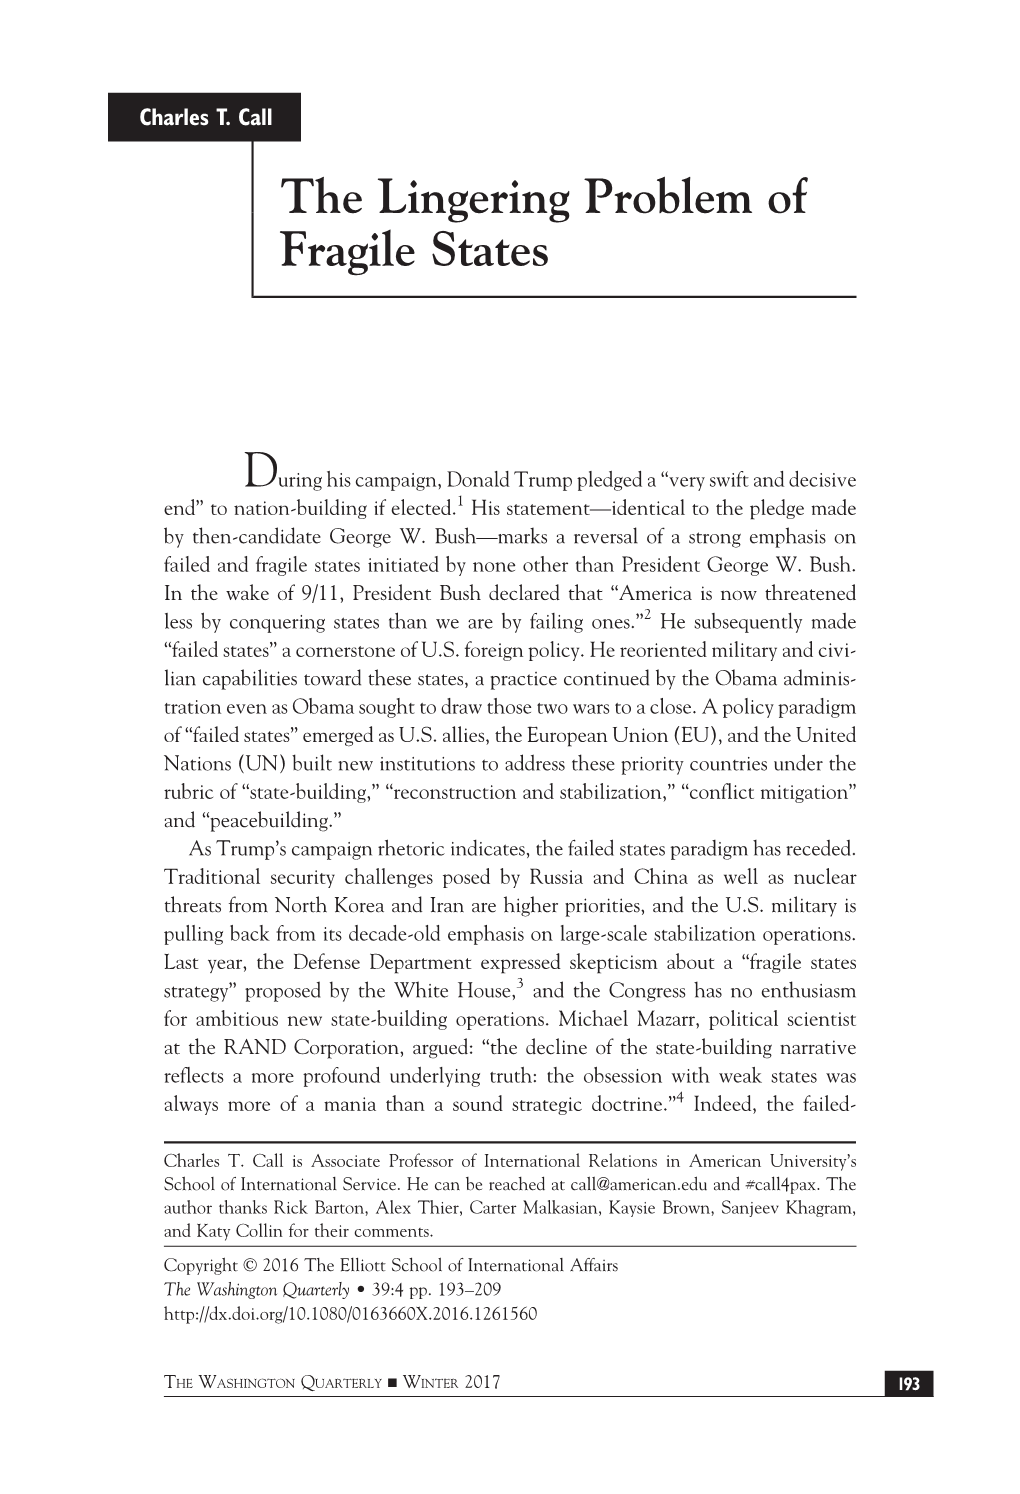 The Lingering Problem of Fragile States